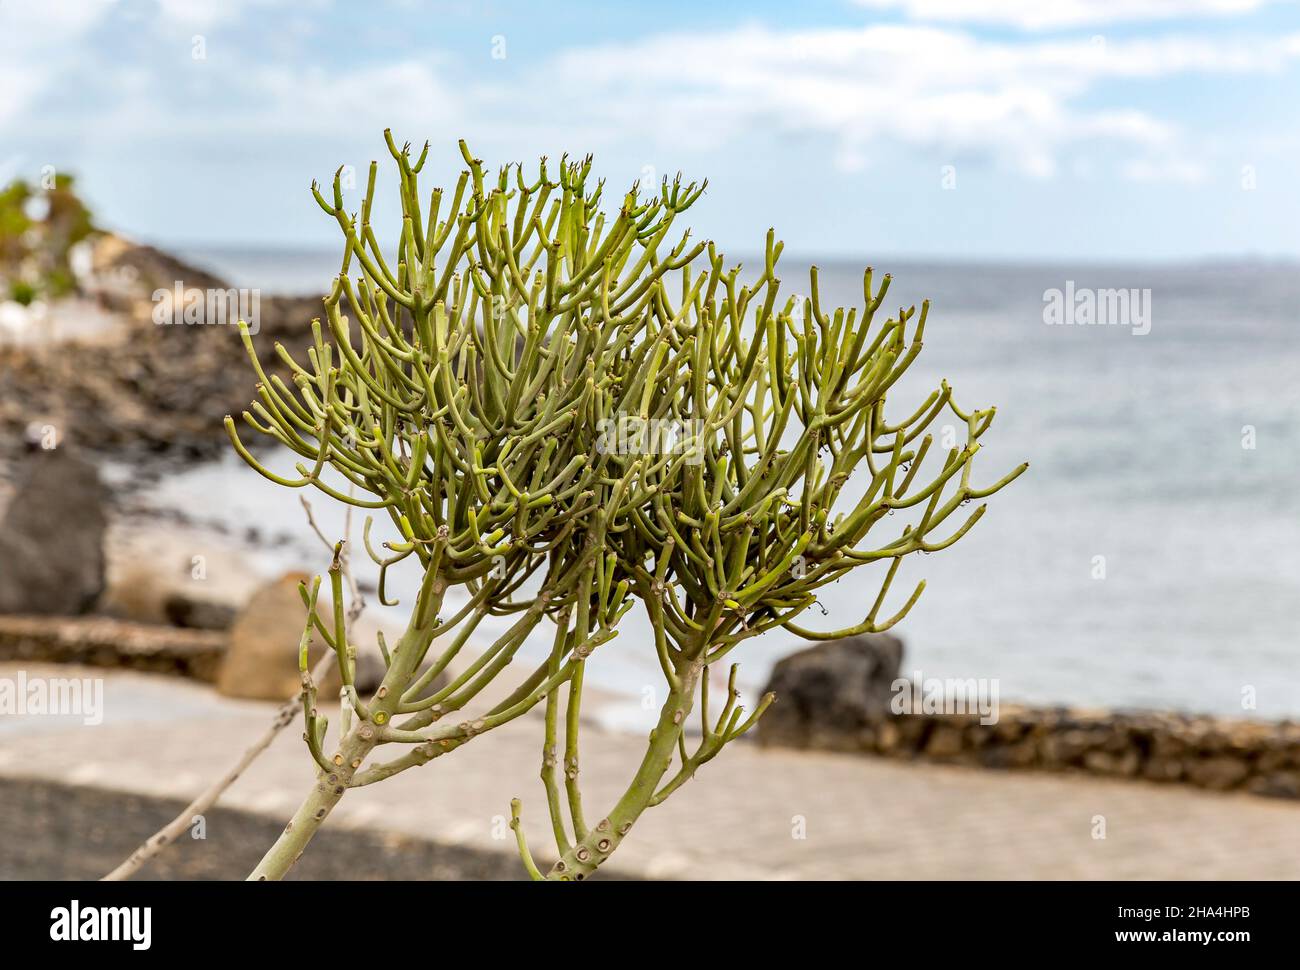 Bleistiftbaum, Euporia tirucalli, playa blanca, lanzarote, Kanaren, kanarische Inseln, spanien, europa Stockfoto